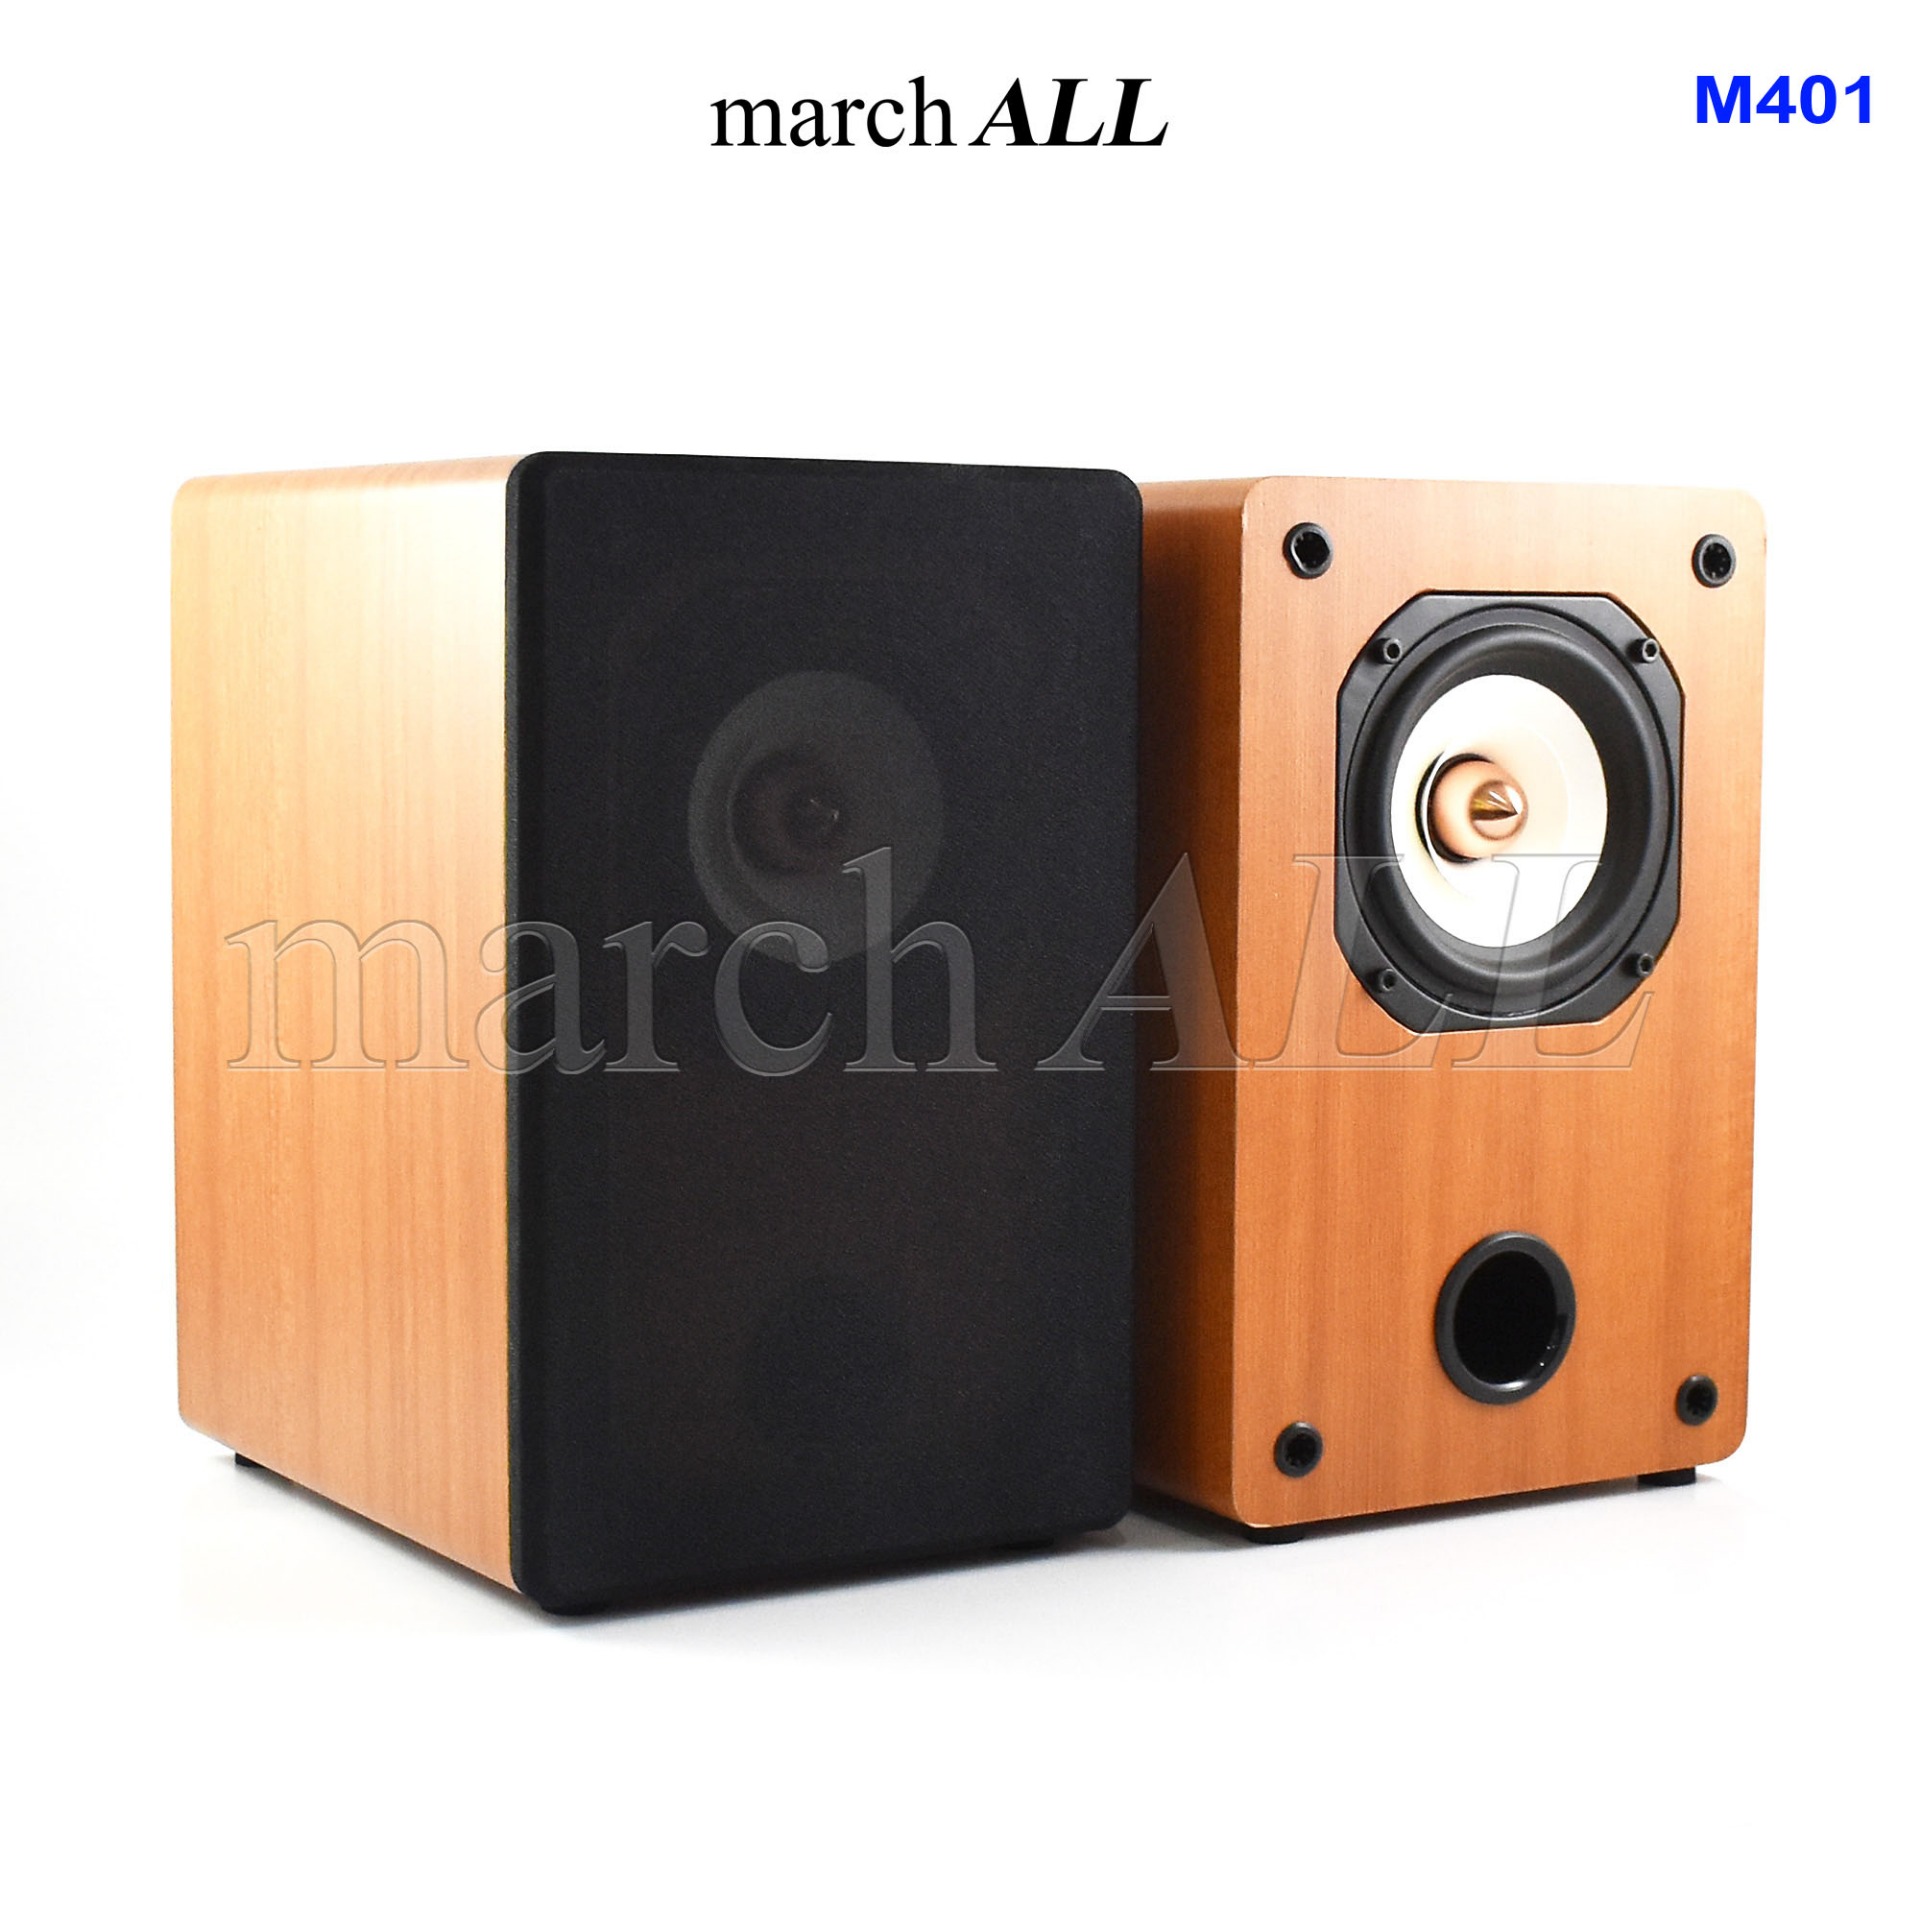 MarchALL M401 ลำโพง ไฮเอ็นด์ ฟลูเรนจ์ จาก Marchall ดอก Full Range ขนาด 4 นิ้ว ตอบสนองครบทุกความถี่เสียง 
HiFi  Full Range 4.0  inches Sound Home Professional speaker